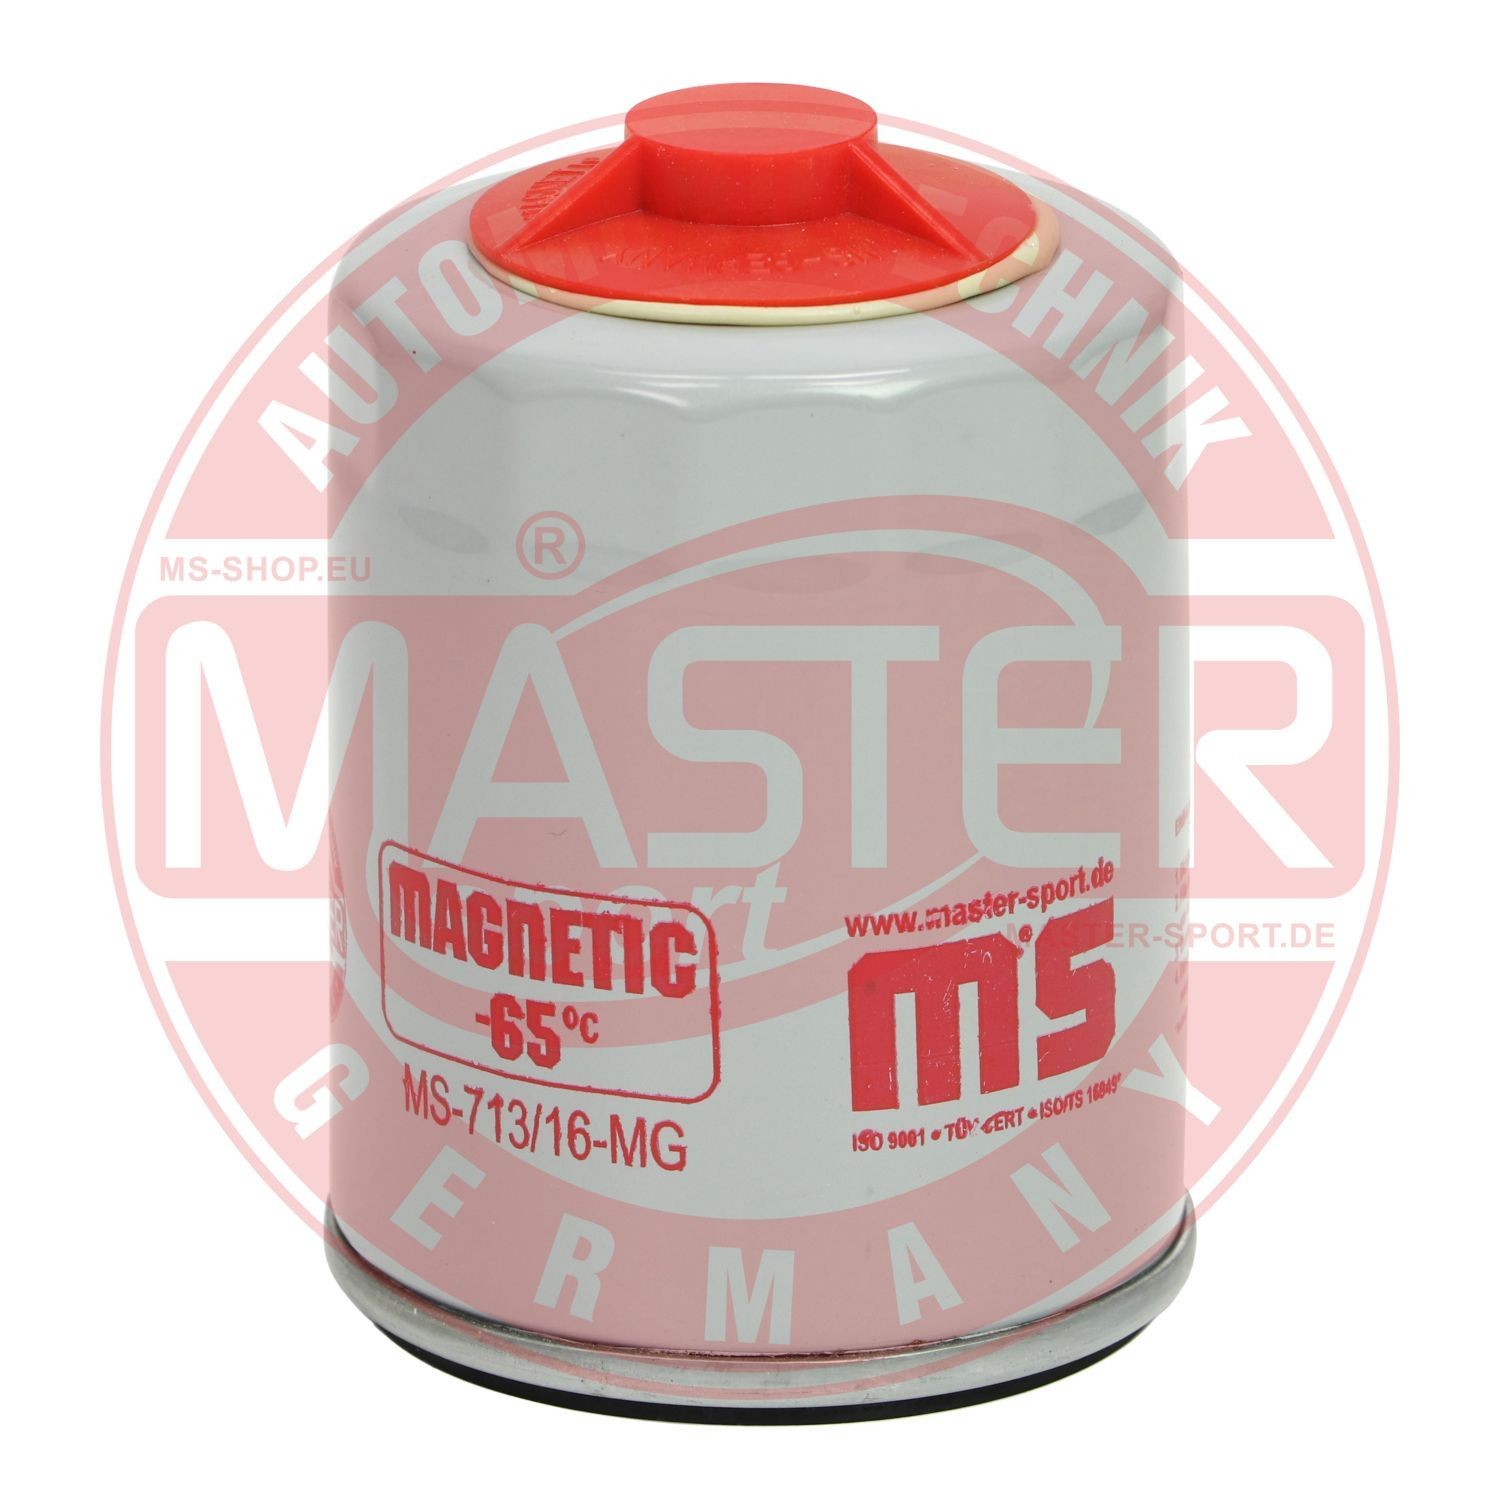 440713161 MASTER-SPORT 713/16-MG-OF-PCS-MS Oil filter 71 753 738